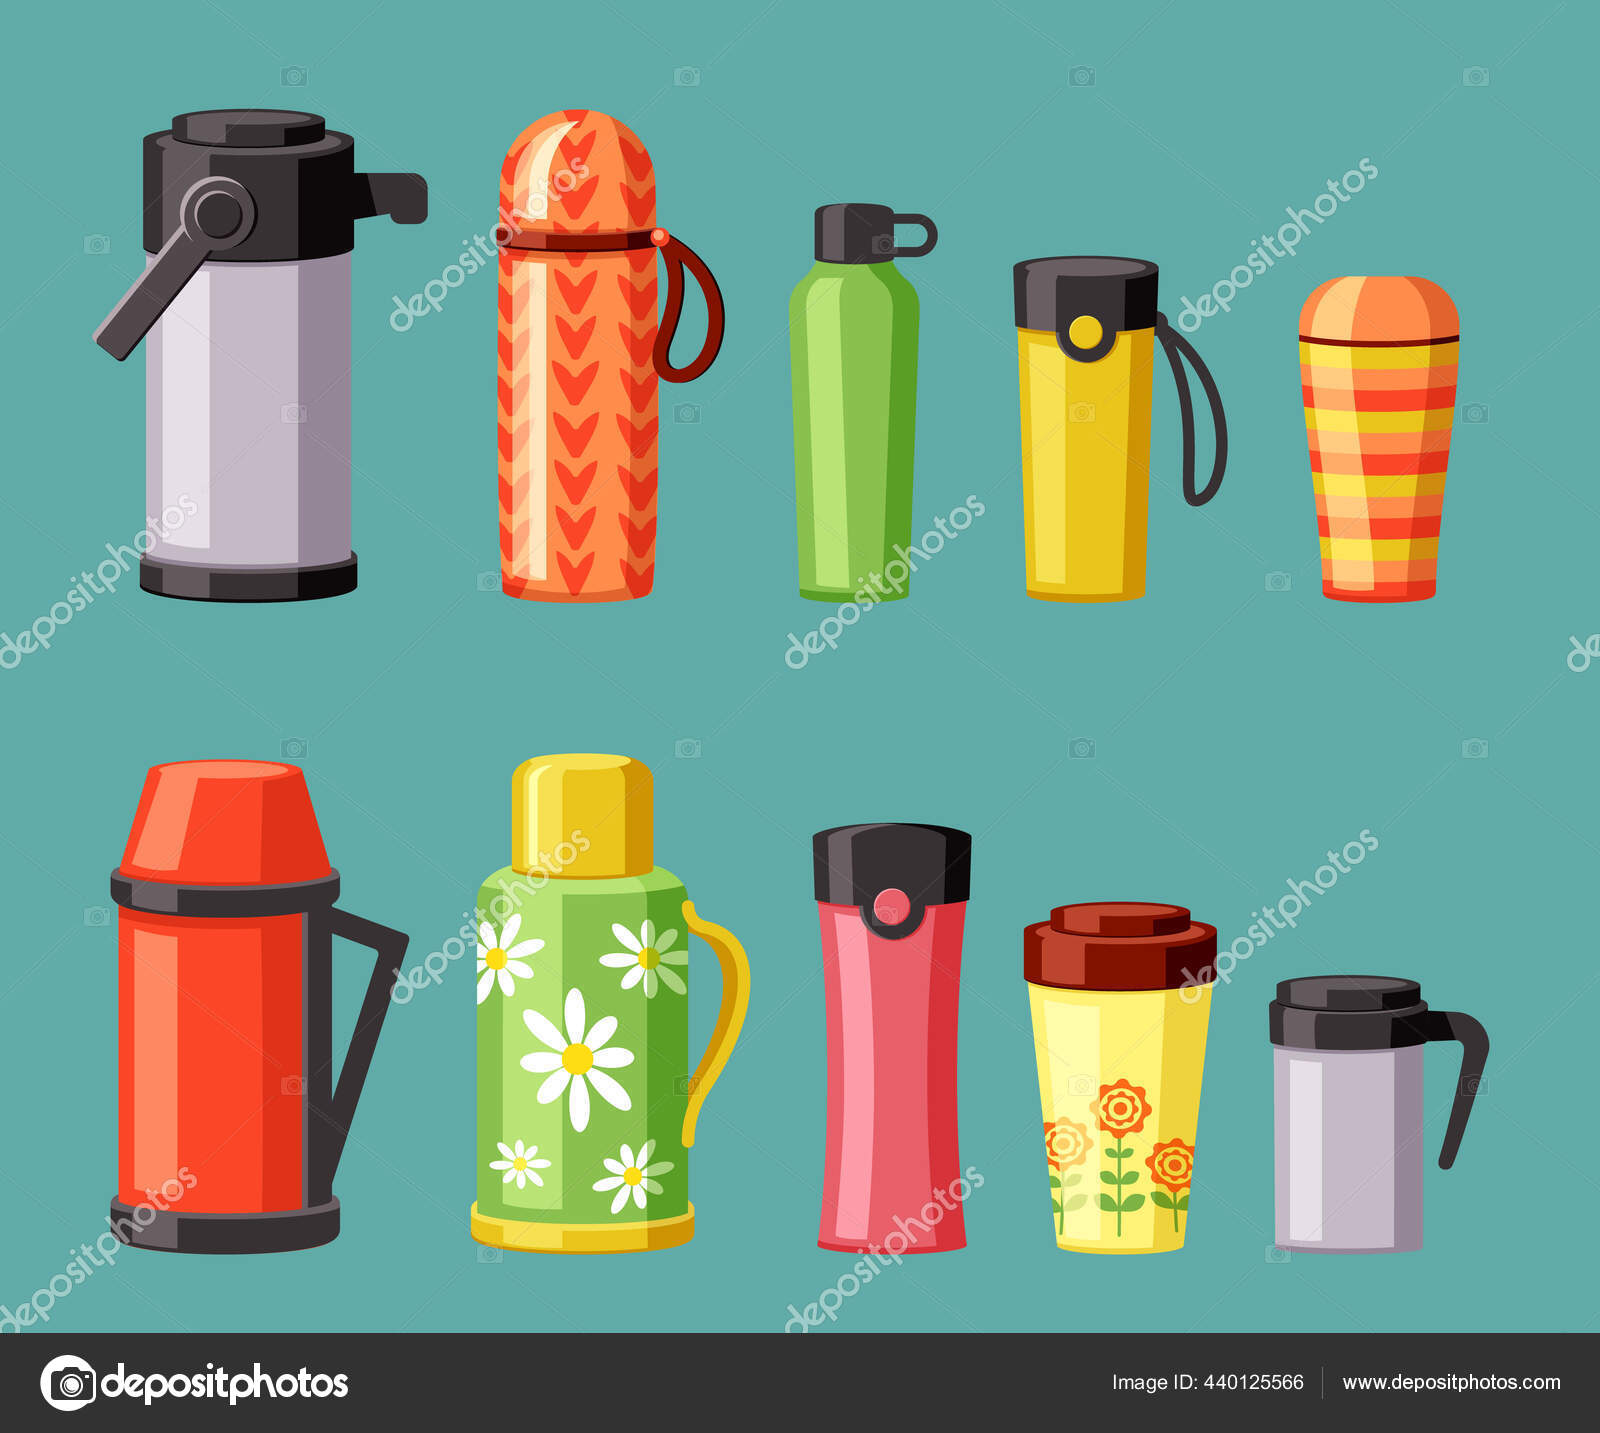 https://st2.depositphotos.com/1074529/44012/v/1600/depositphotos_440125566-stock-illustration-thermoses-and-thermo-mugs-set.jpg